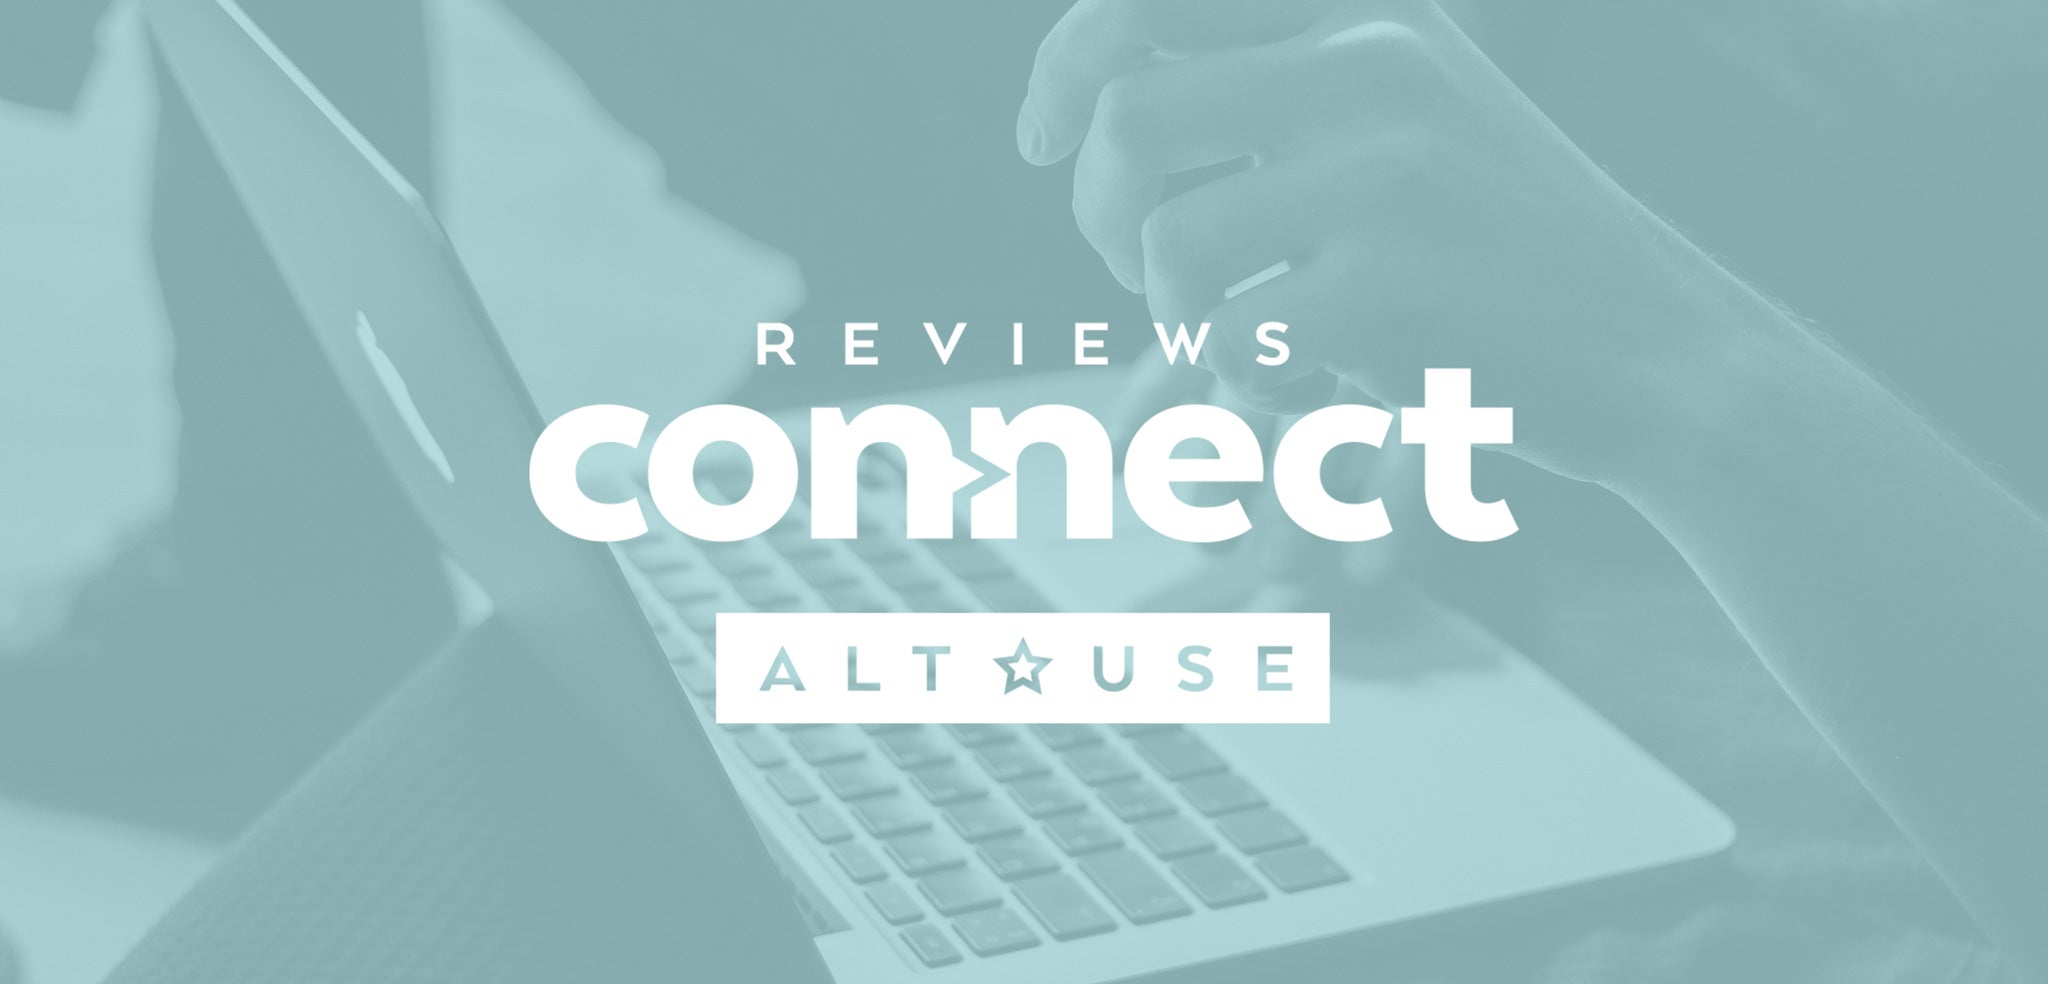 Reviews Connect Widget – Alternate Uses